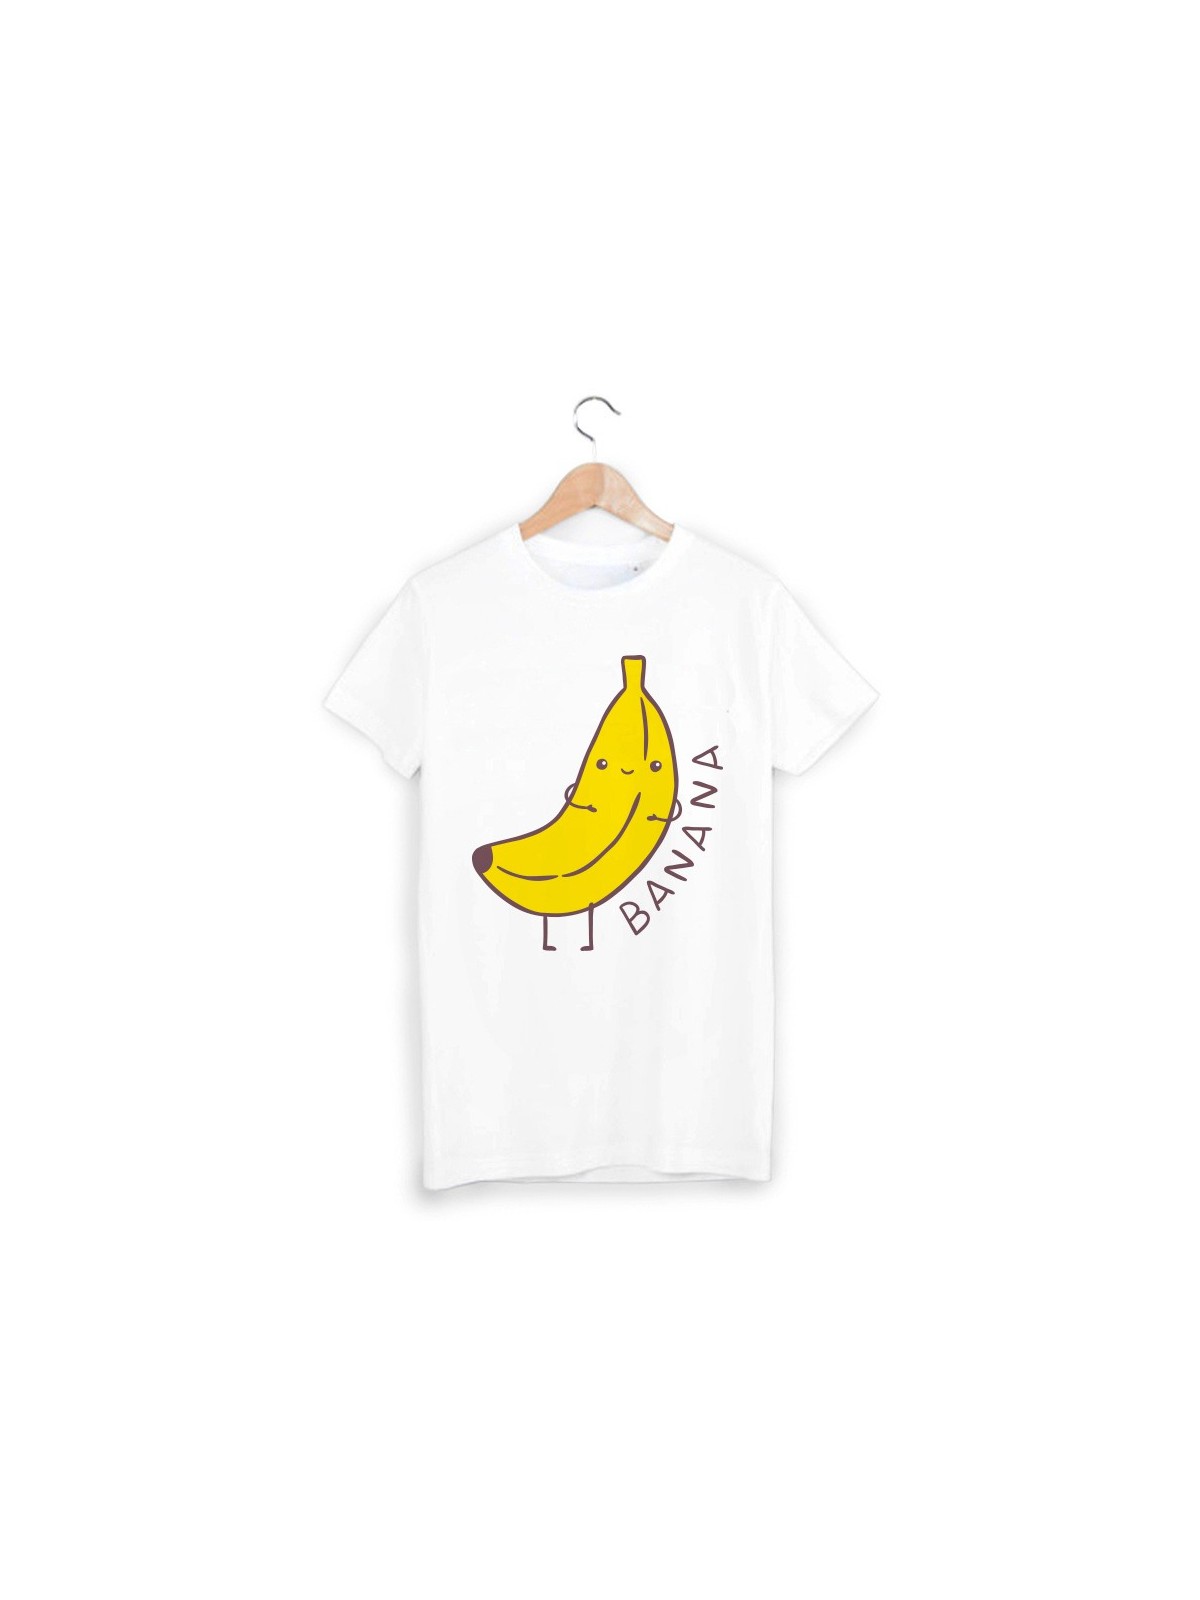 T-Shirt banane ref 998